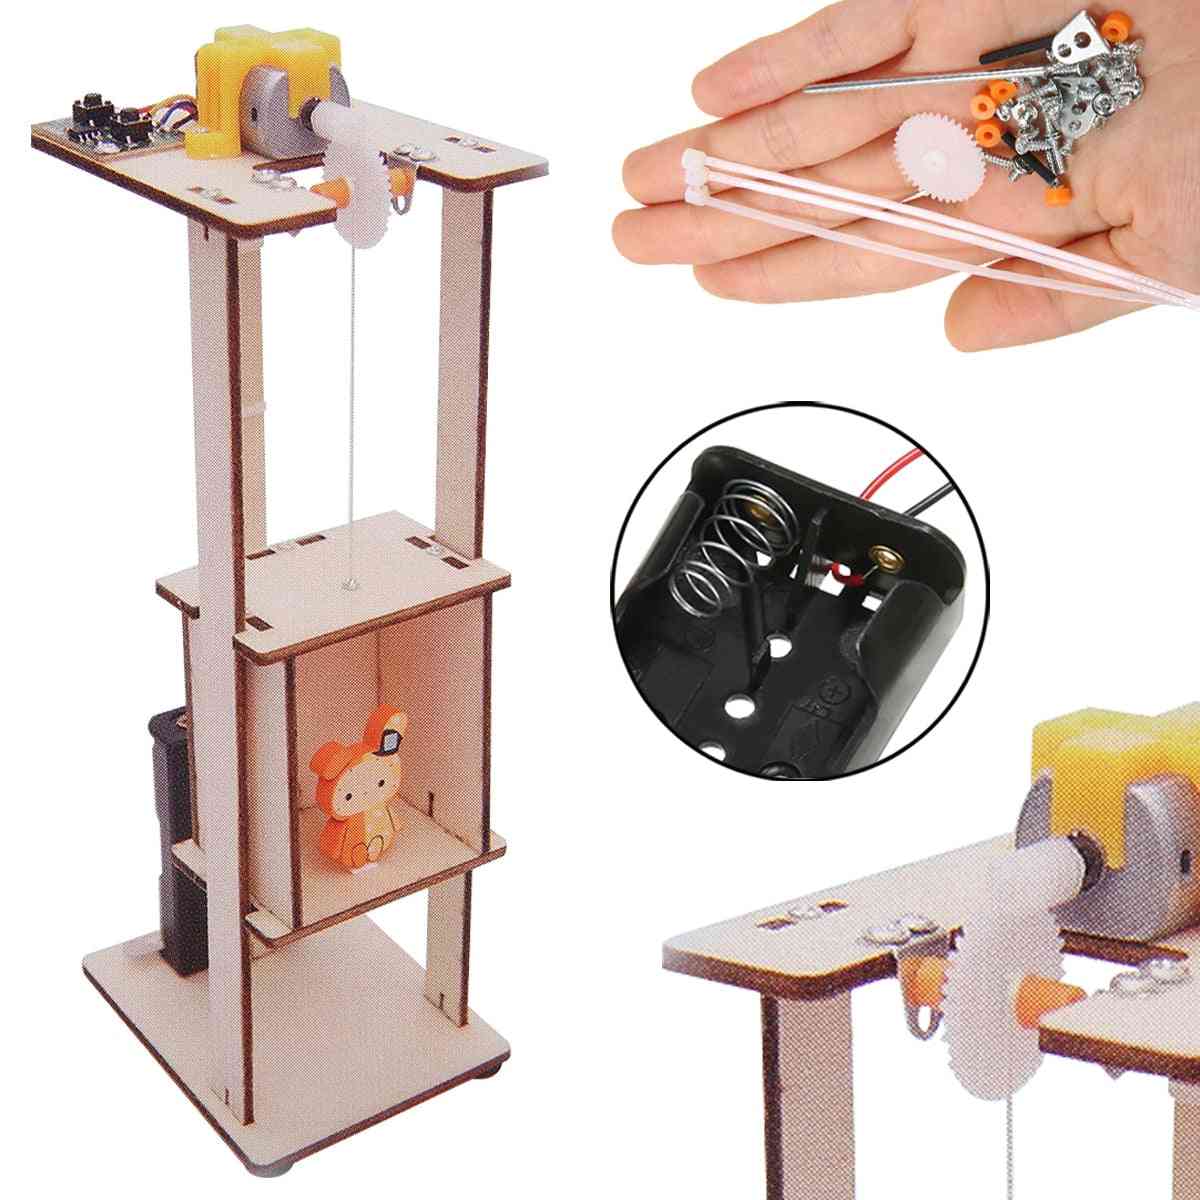 Wood Assemble Diy Electric Lift Kids Science - Experiment Material Kits Tool